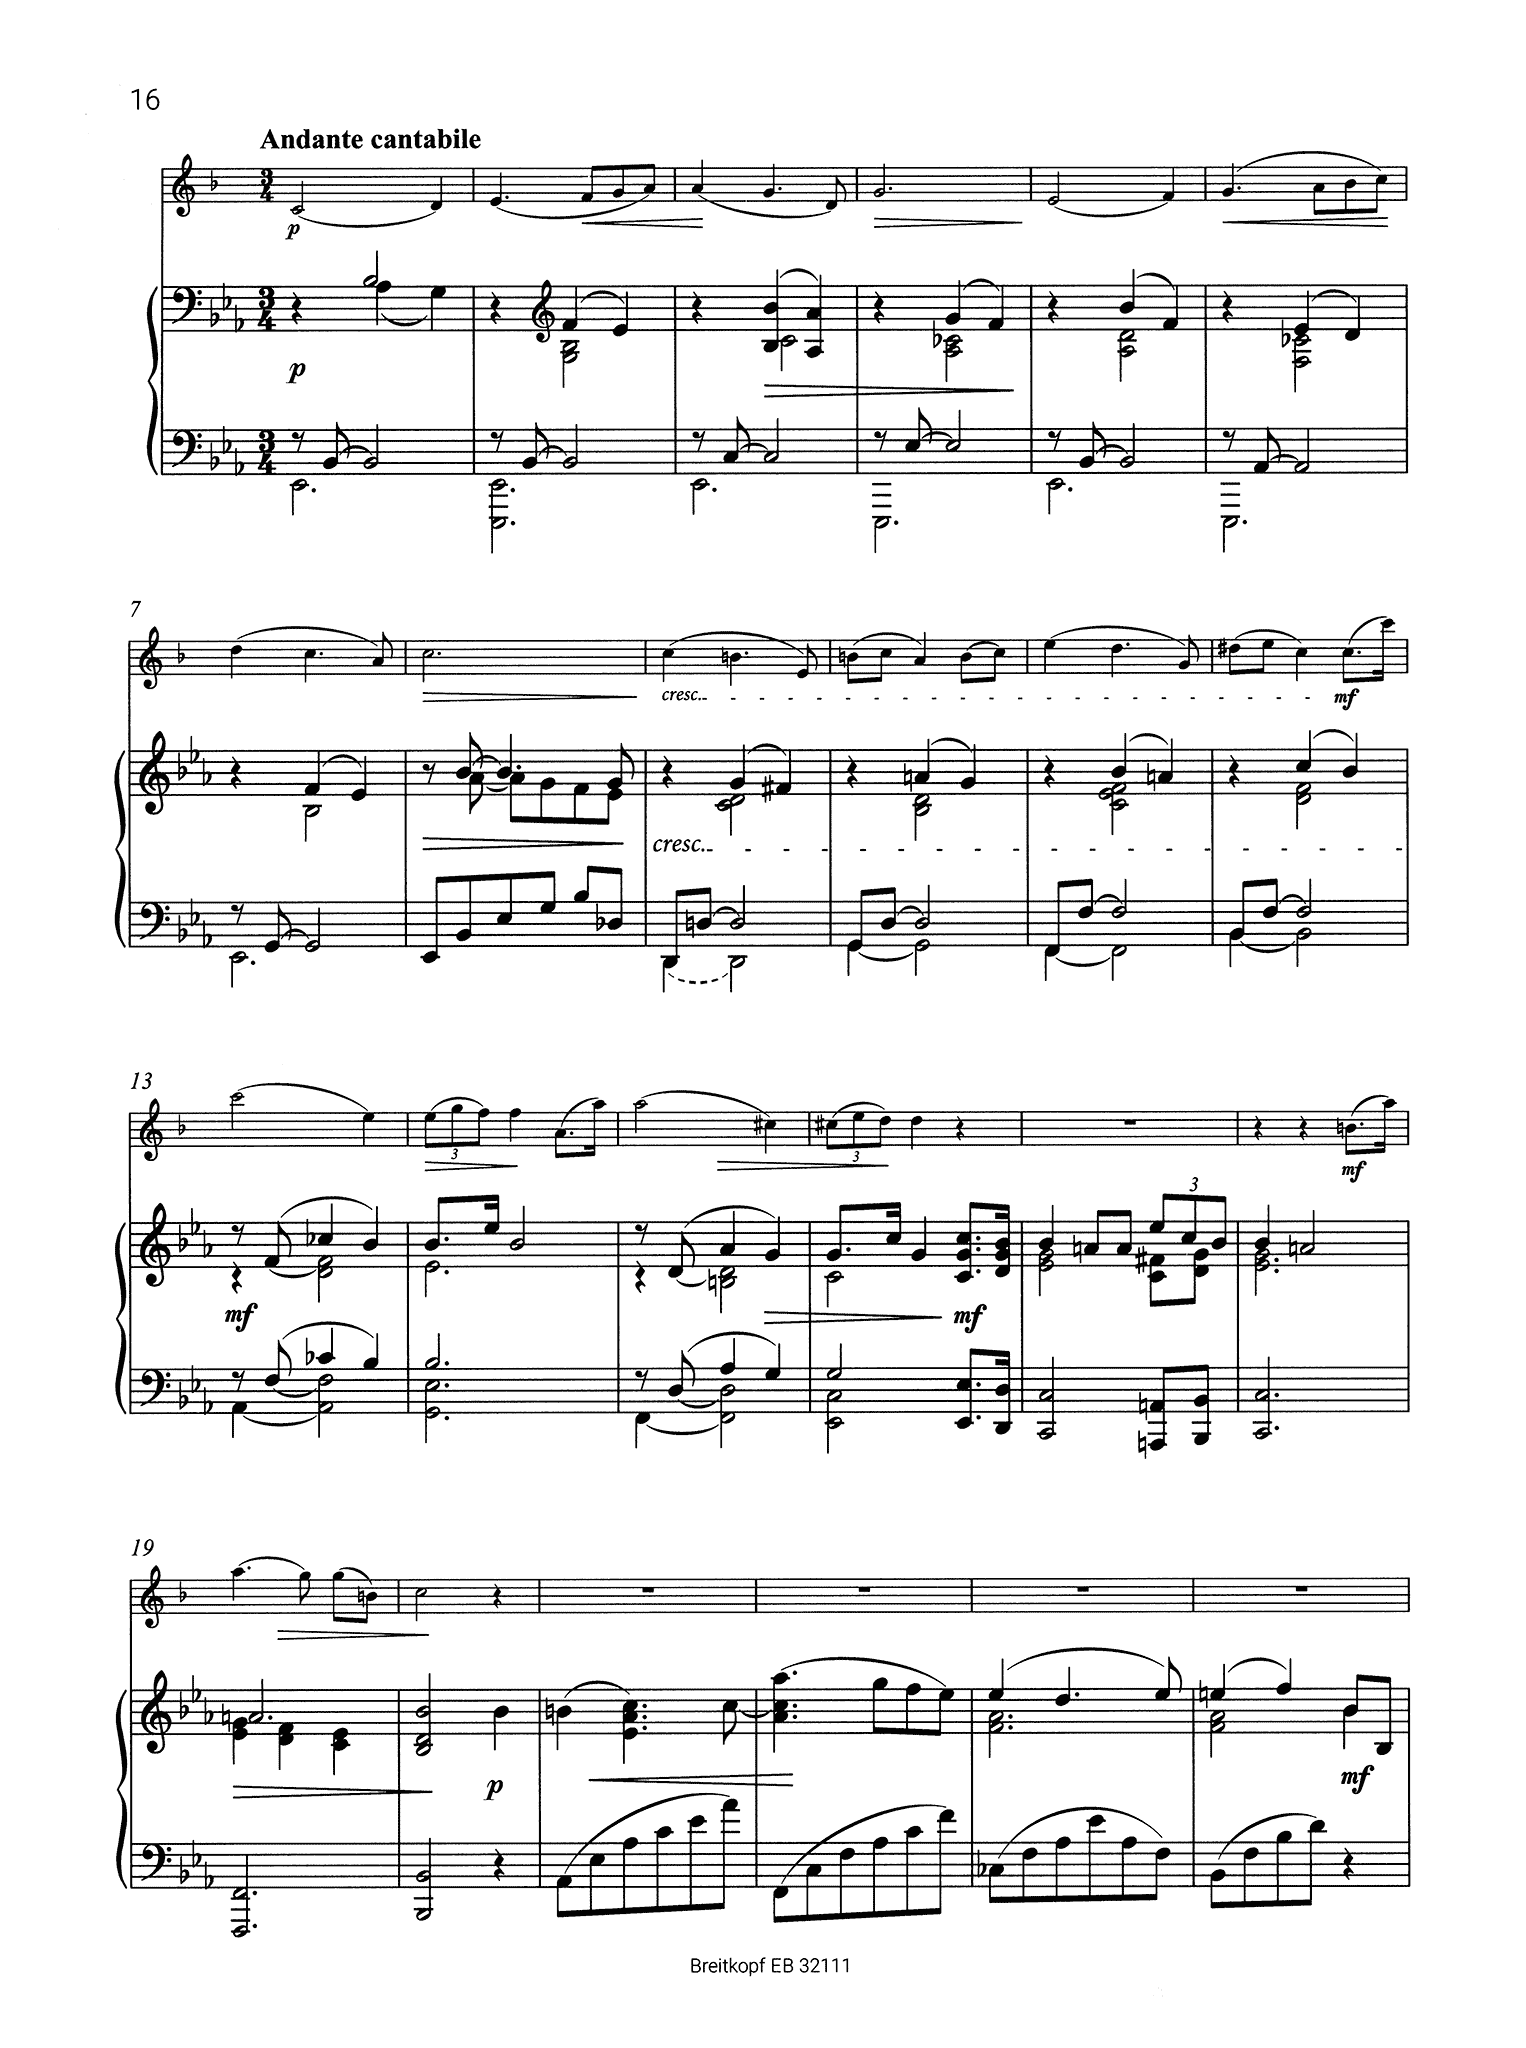 Camillo Schumann Sonata No. 1 in B-flat Major, Op. 112 clarinet & piano - Movement 2